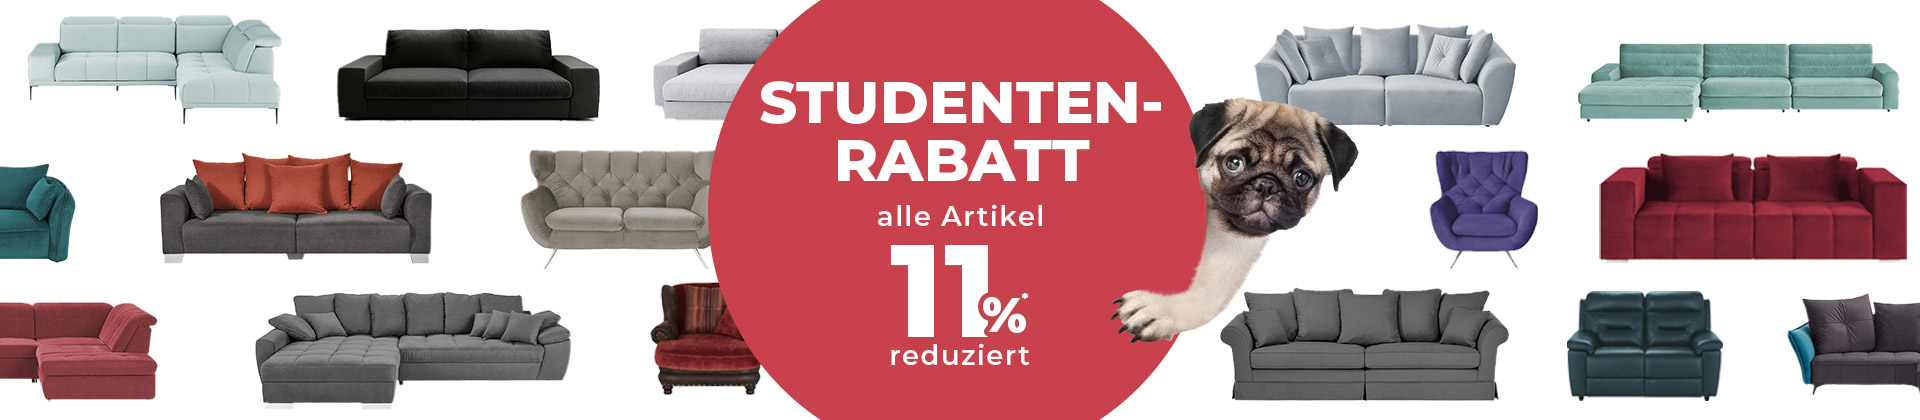 11% Studentenrabatt bei Sofa.de